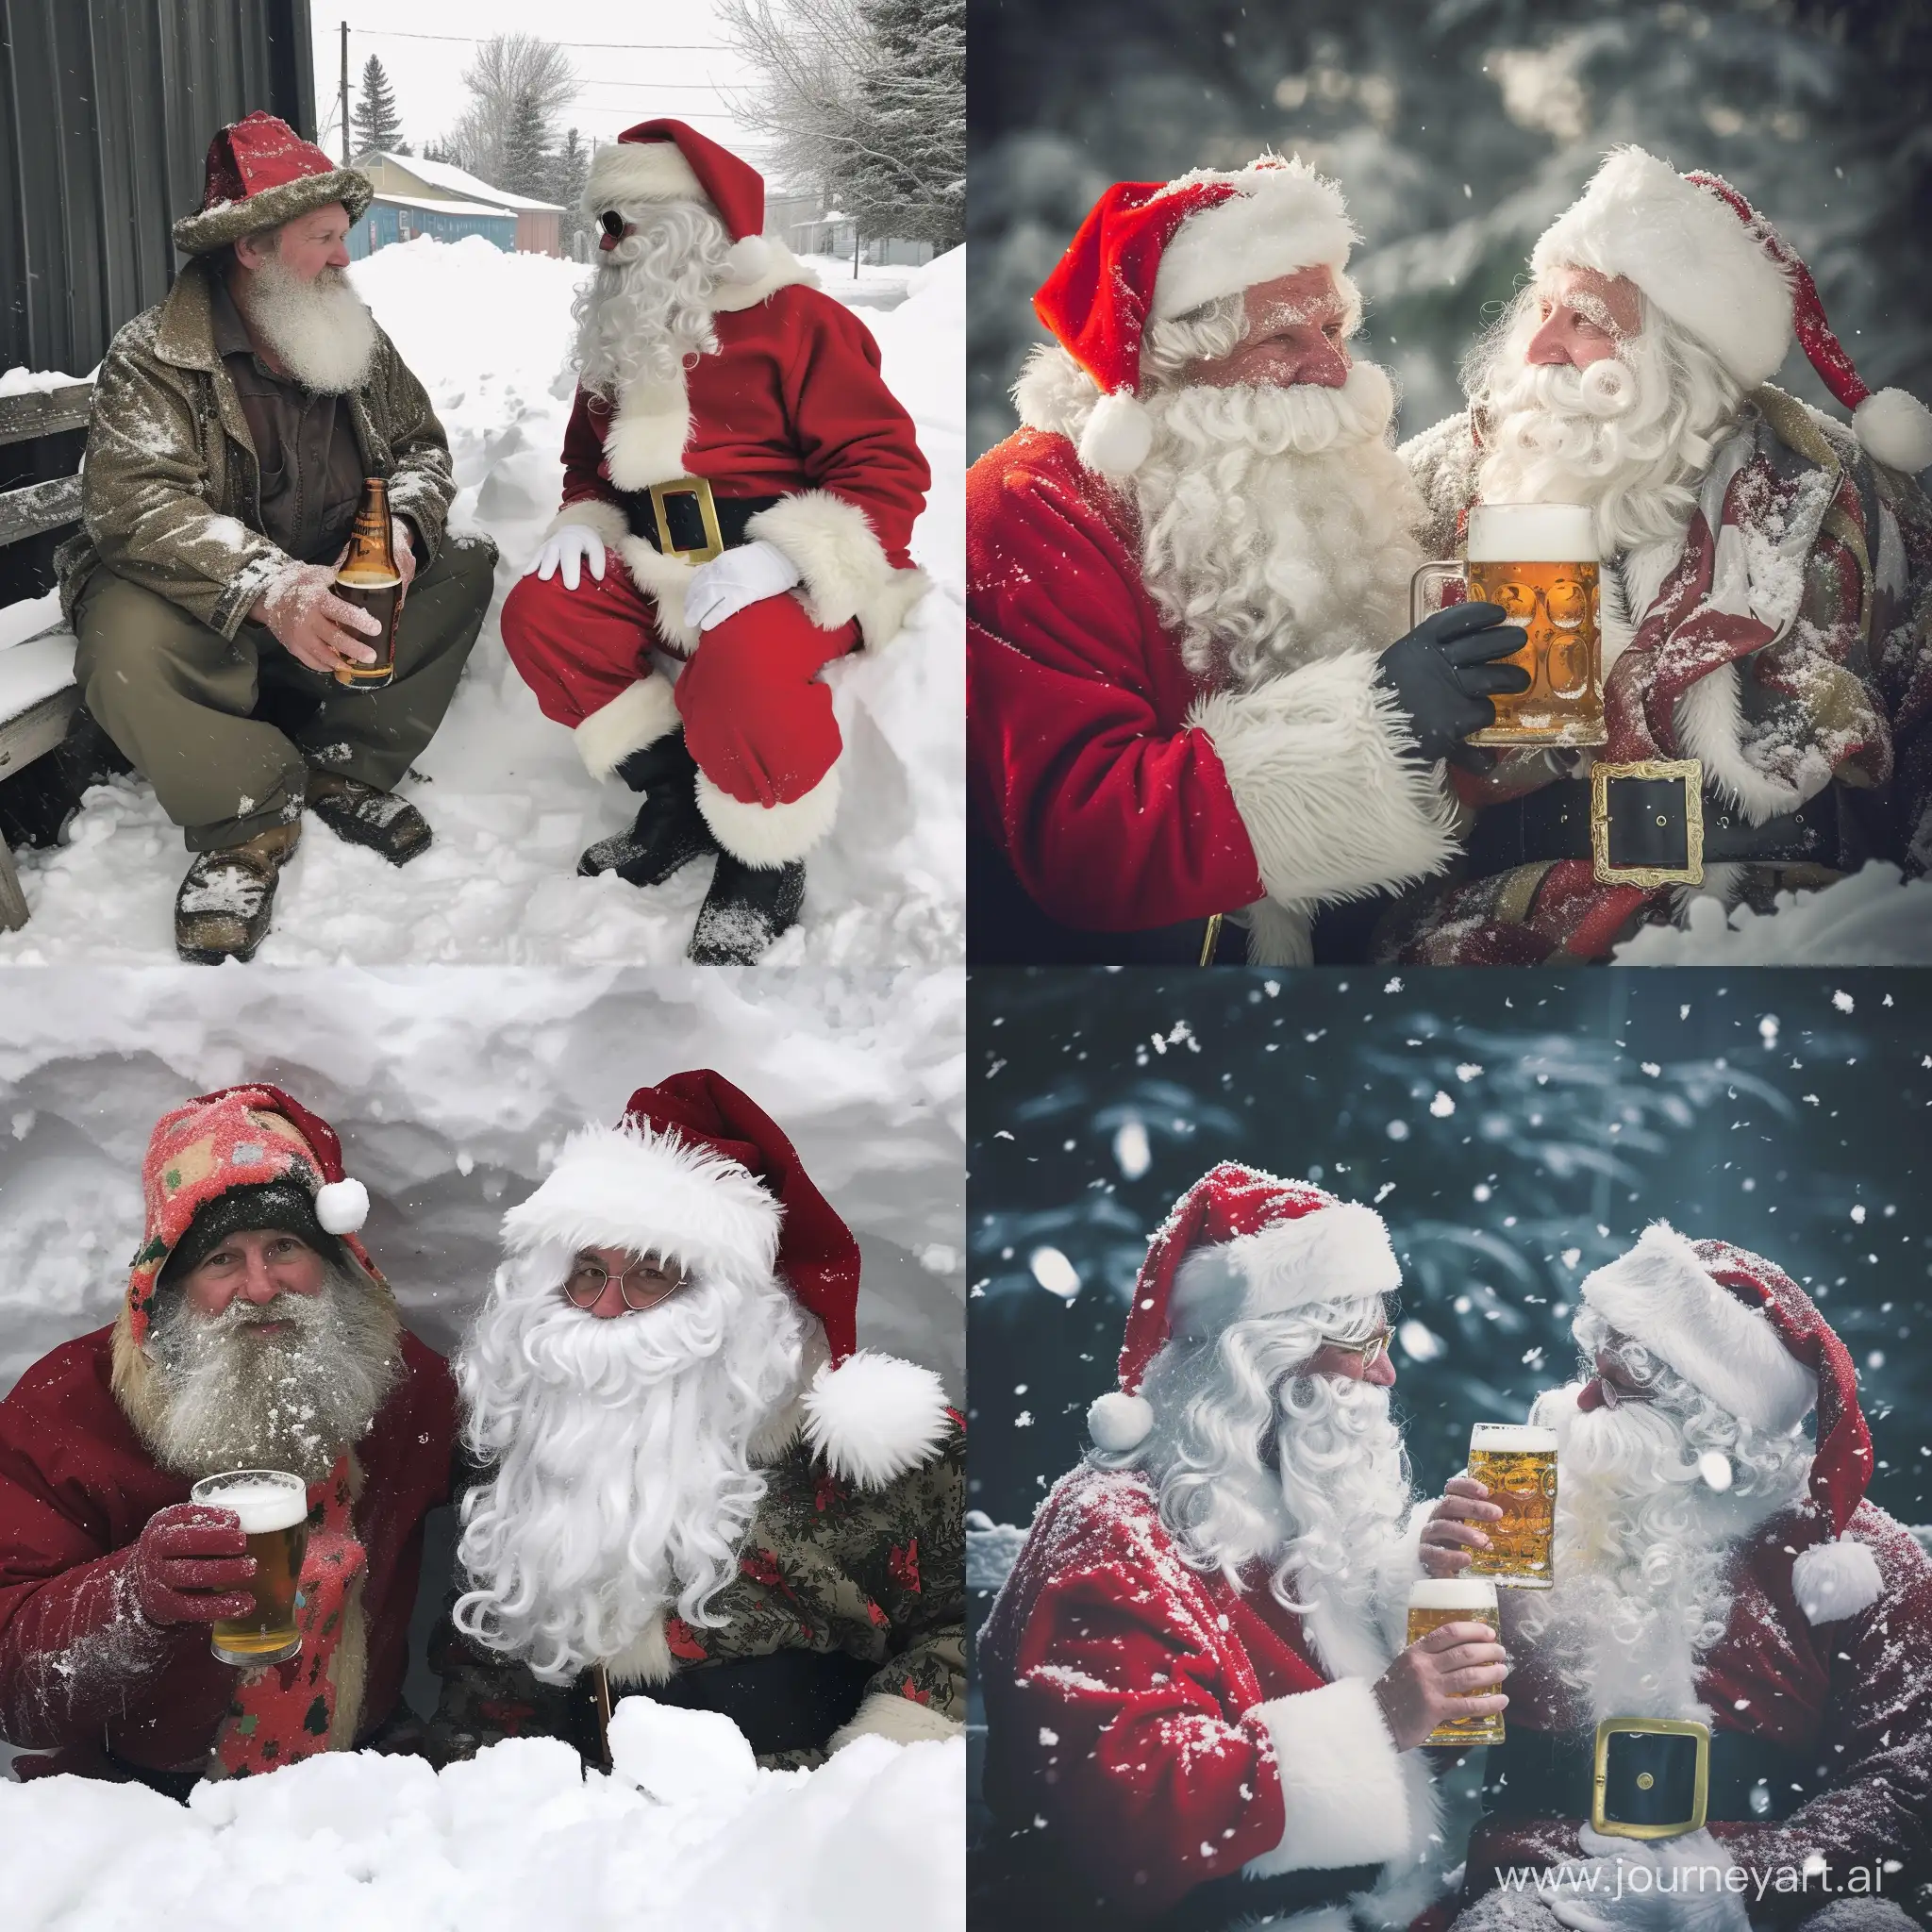 Snowman-Sharing-a-Beer-with-Santa-Claus